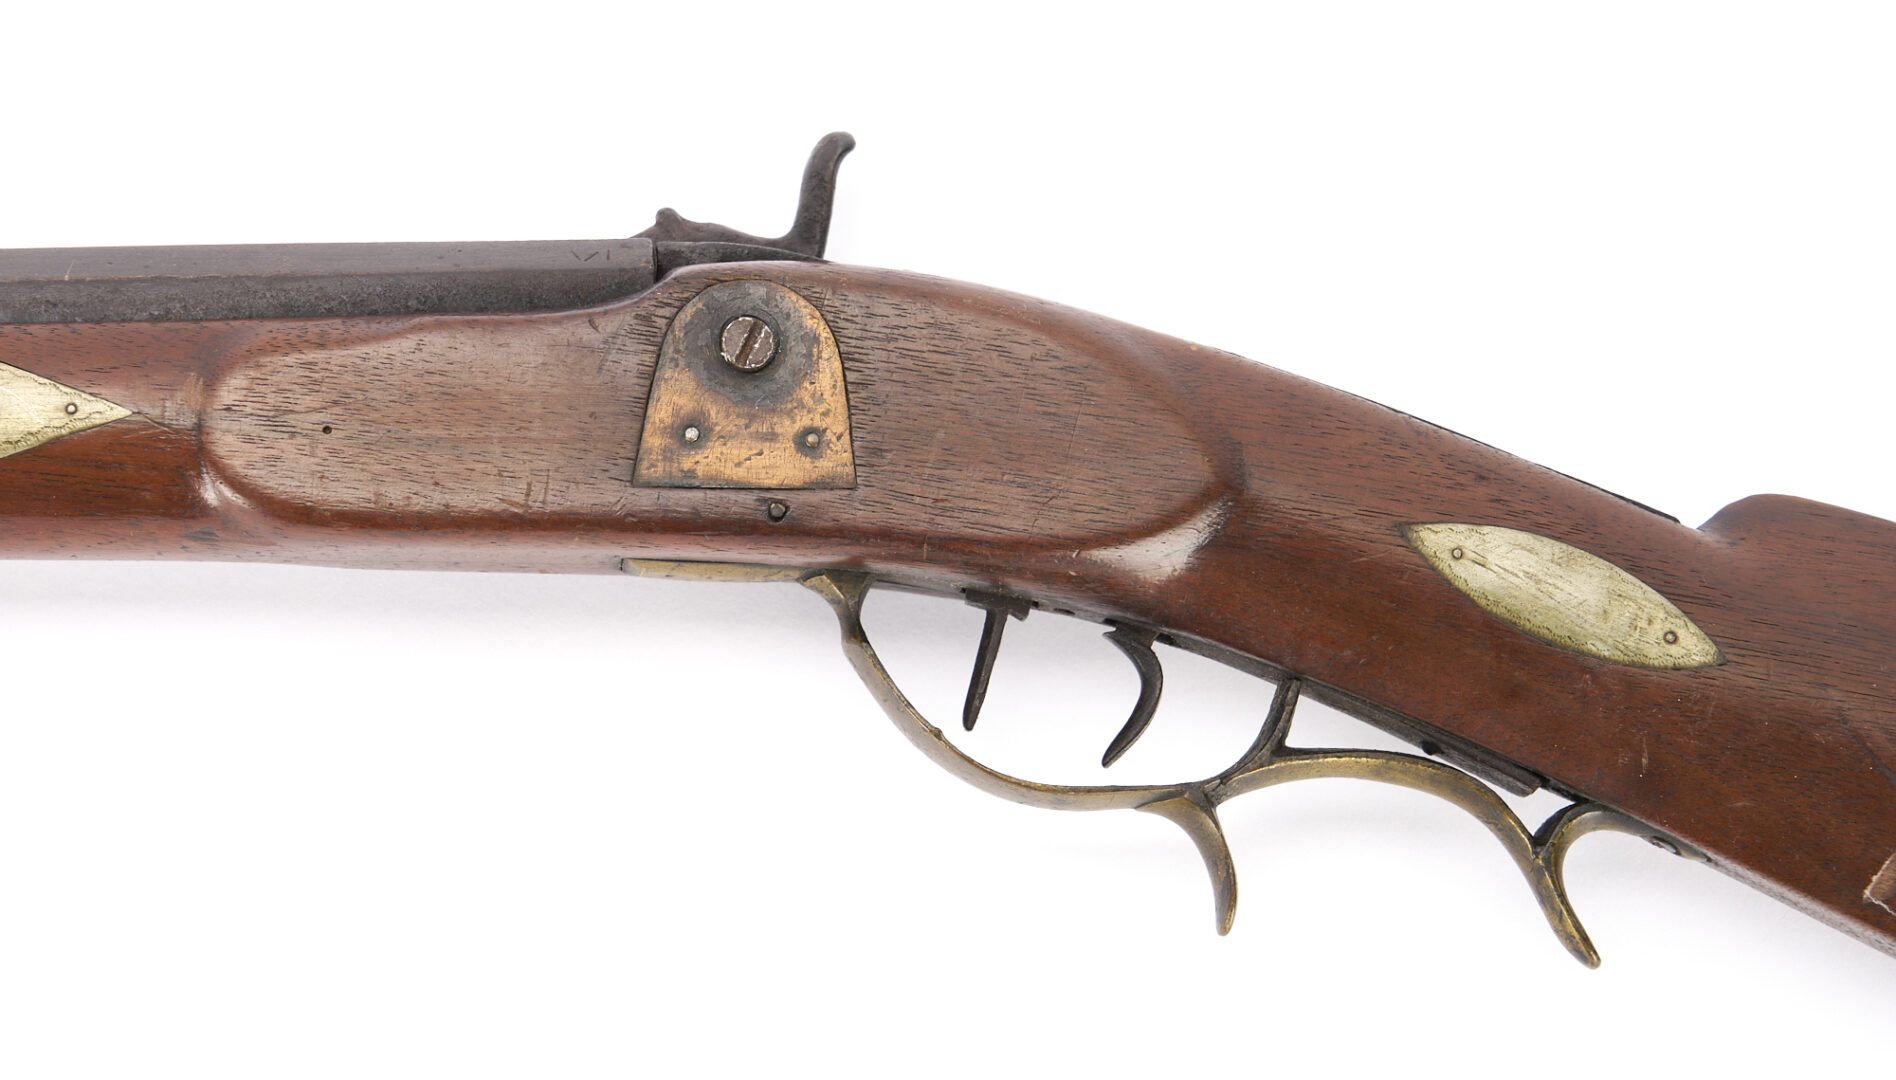 Lot 523: Half Stock Percussion Long Rifle, Marked "W Lamb & Son", North Carolina; Walter Cline Collection